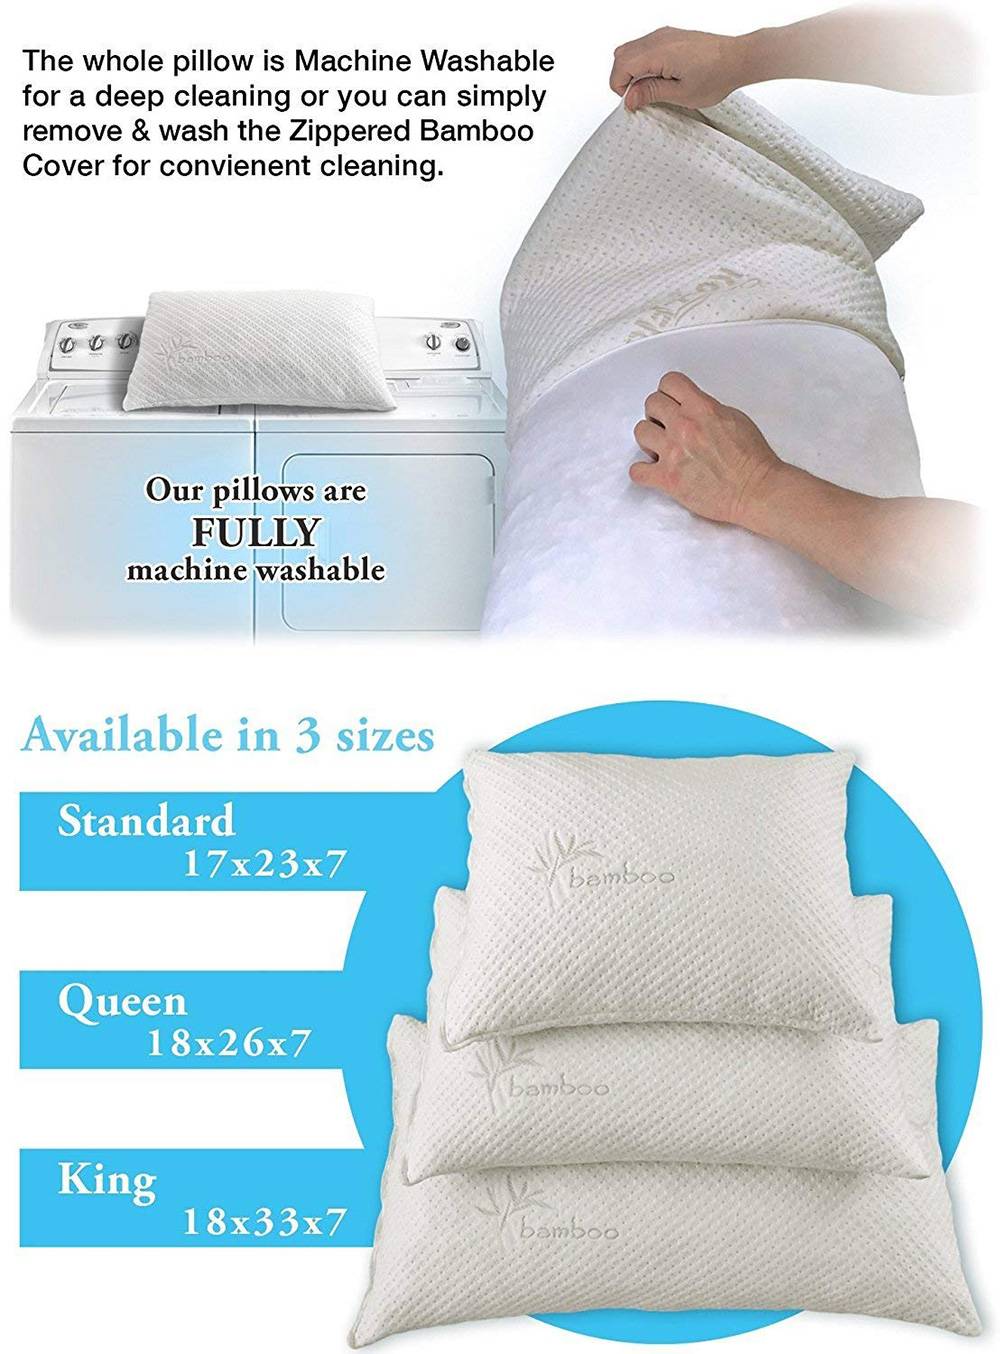 machine washable pillows